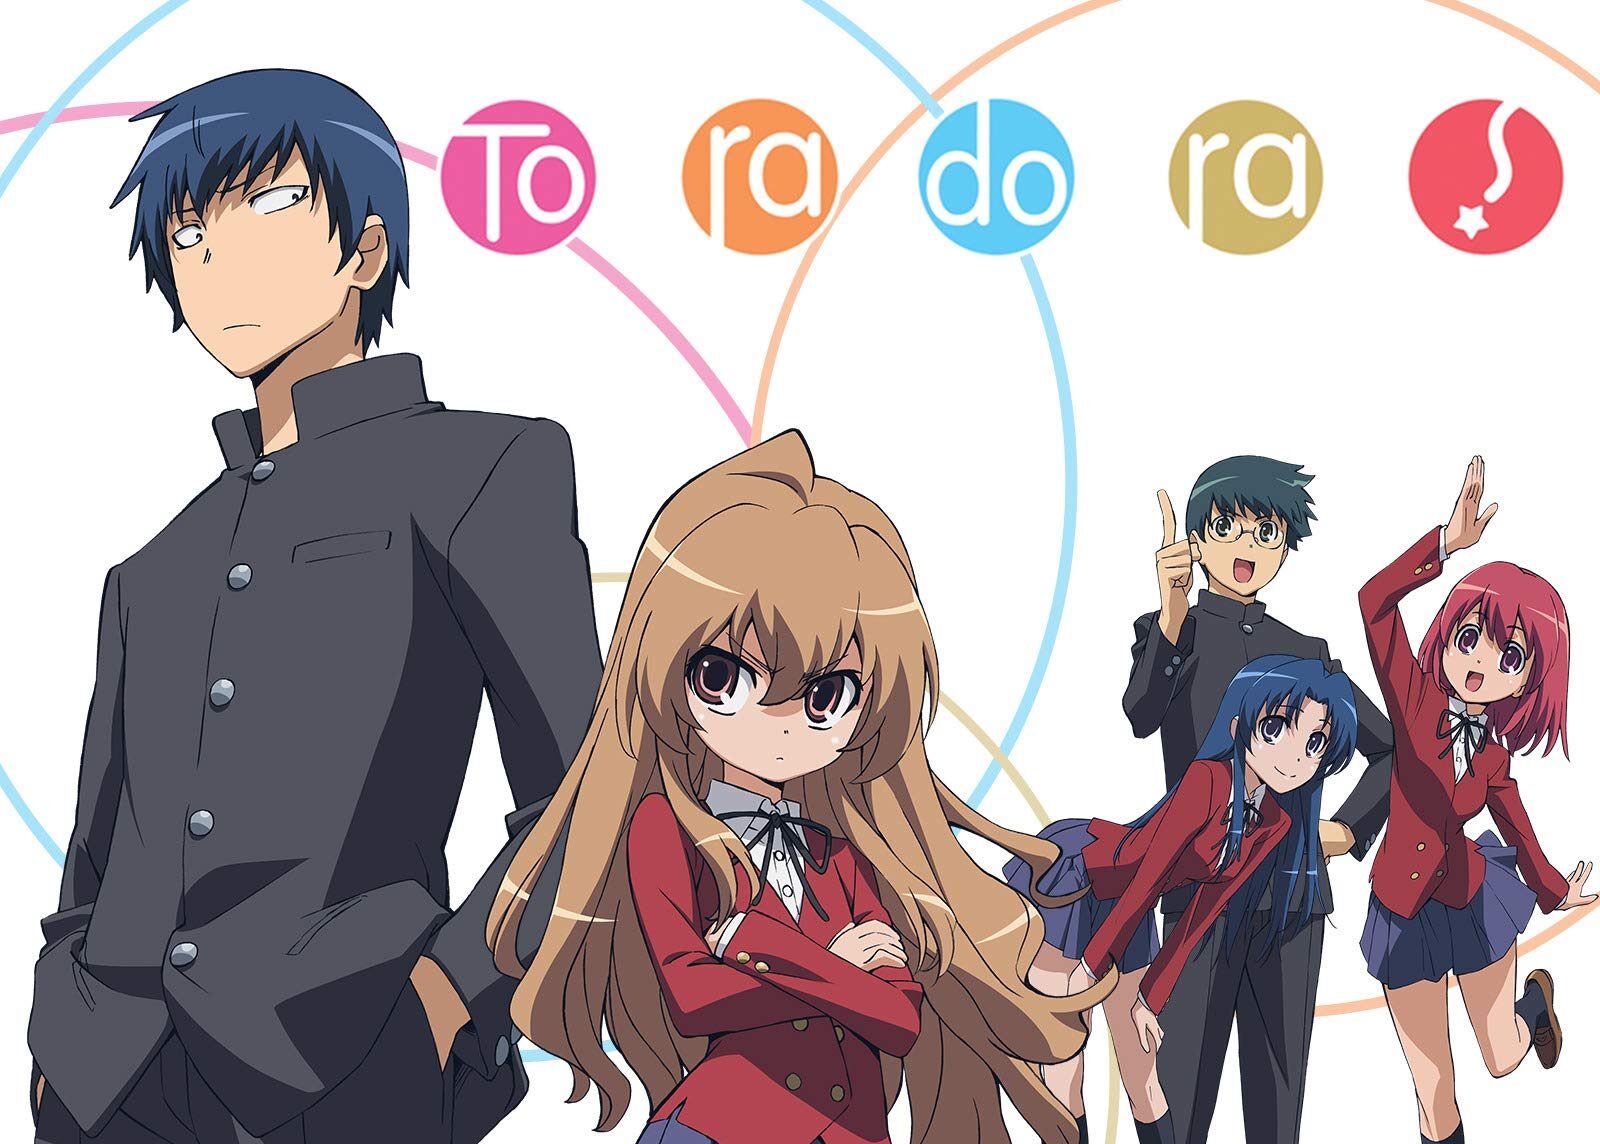 Toradora! The Complete Series Review • Anime UK News